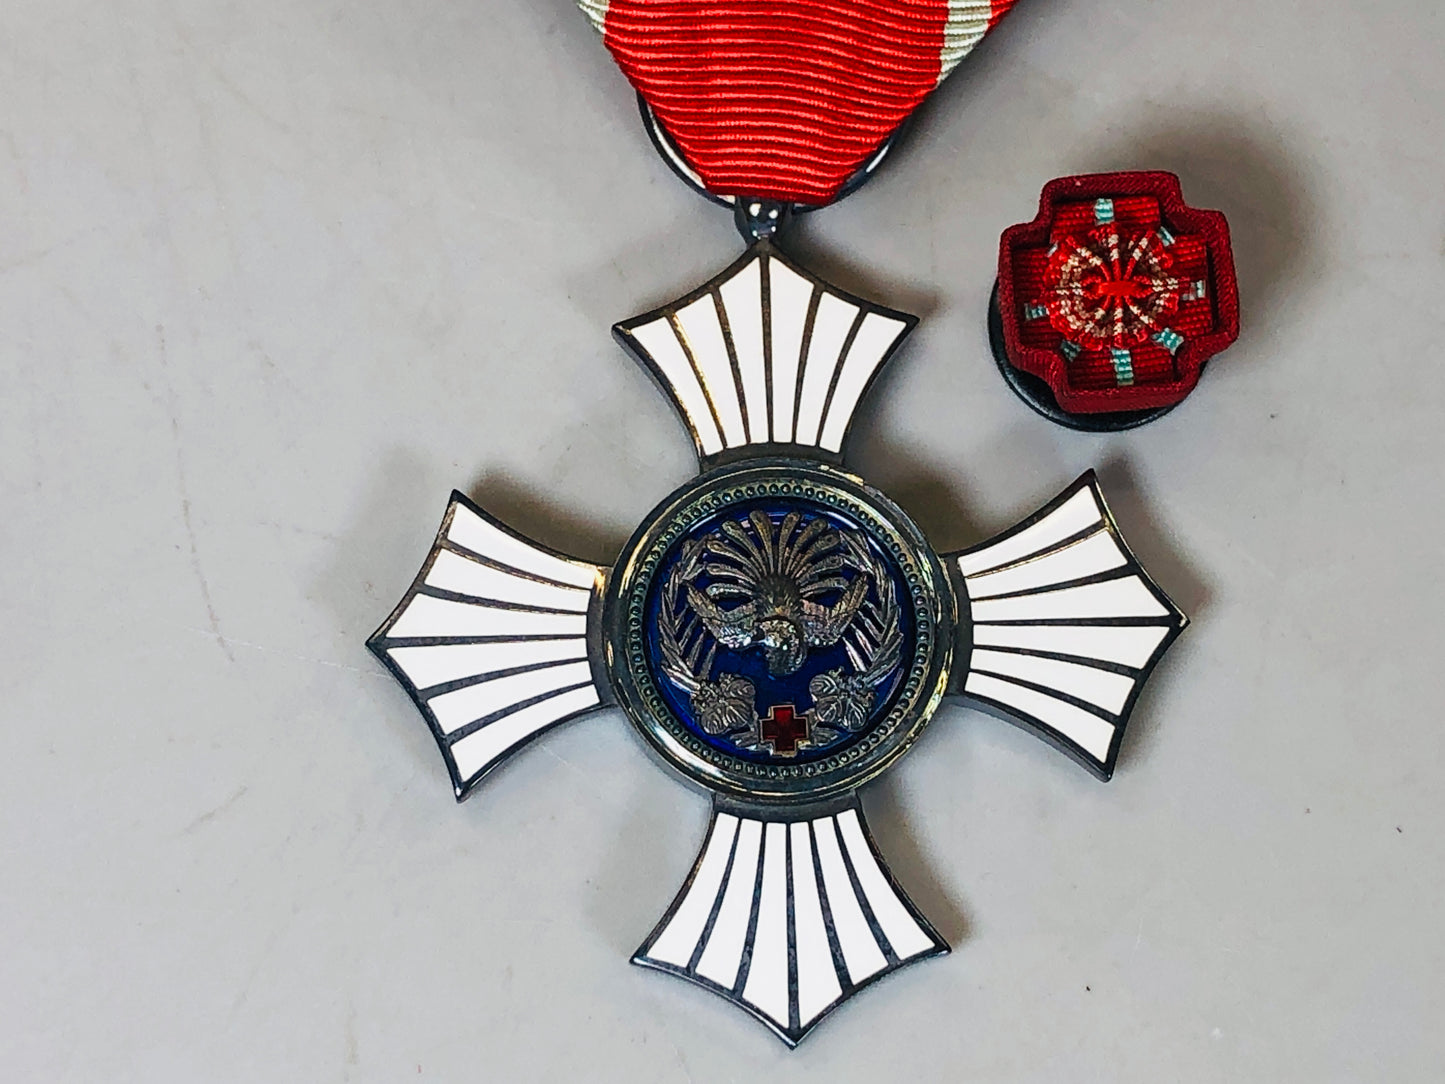 Y5554 KUNSHO Japanese Red Cross medals set of 2 Imperial Japan Army WW2 vintage